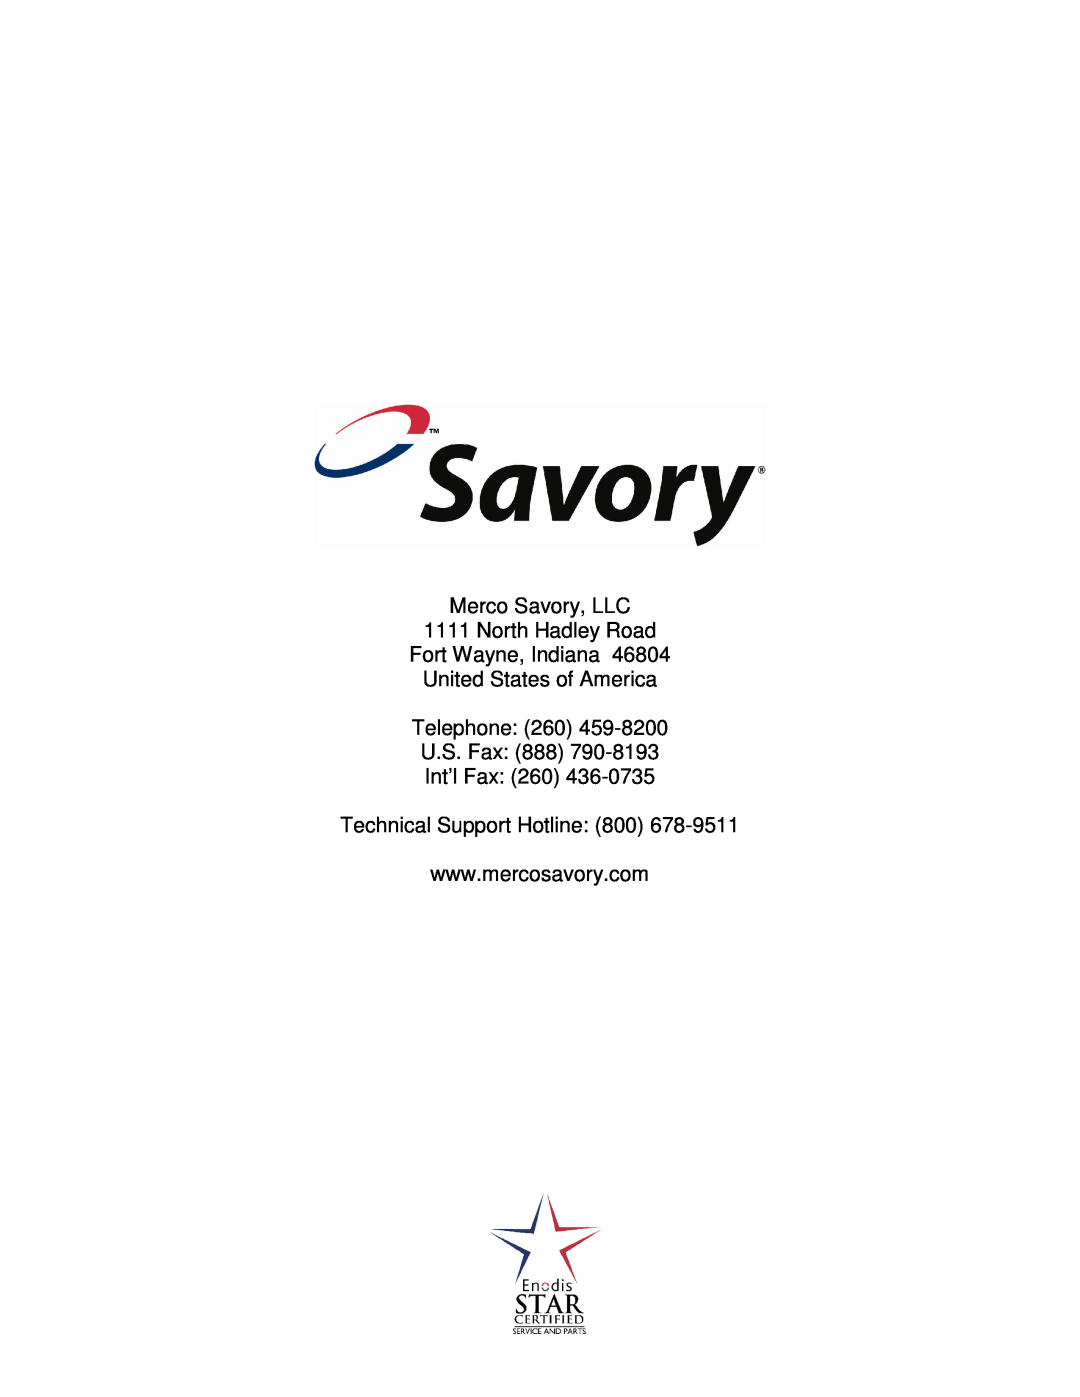 Merco Savory ST-1 manual Merco Savory, LLC 1111 North Hadley Road, Fort Wayne, Indiana United States of America 